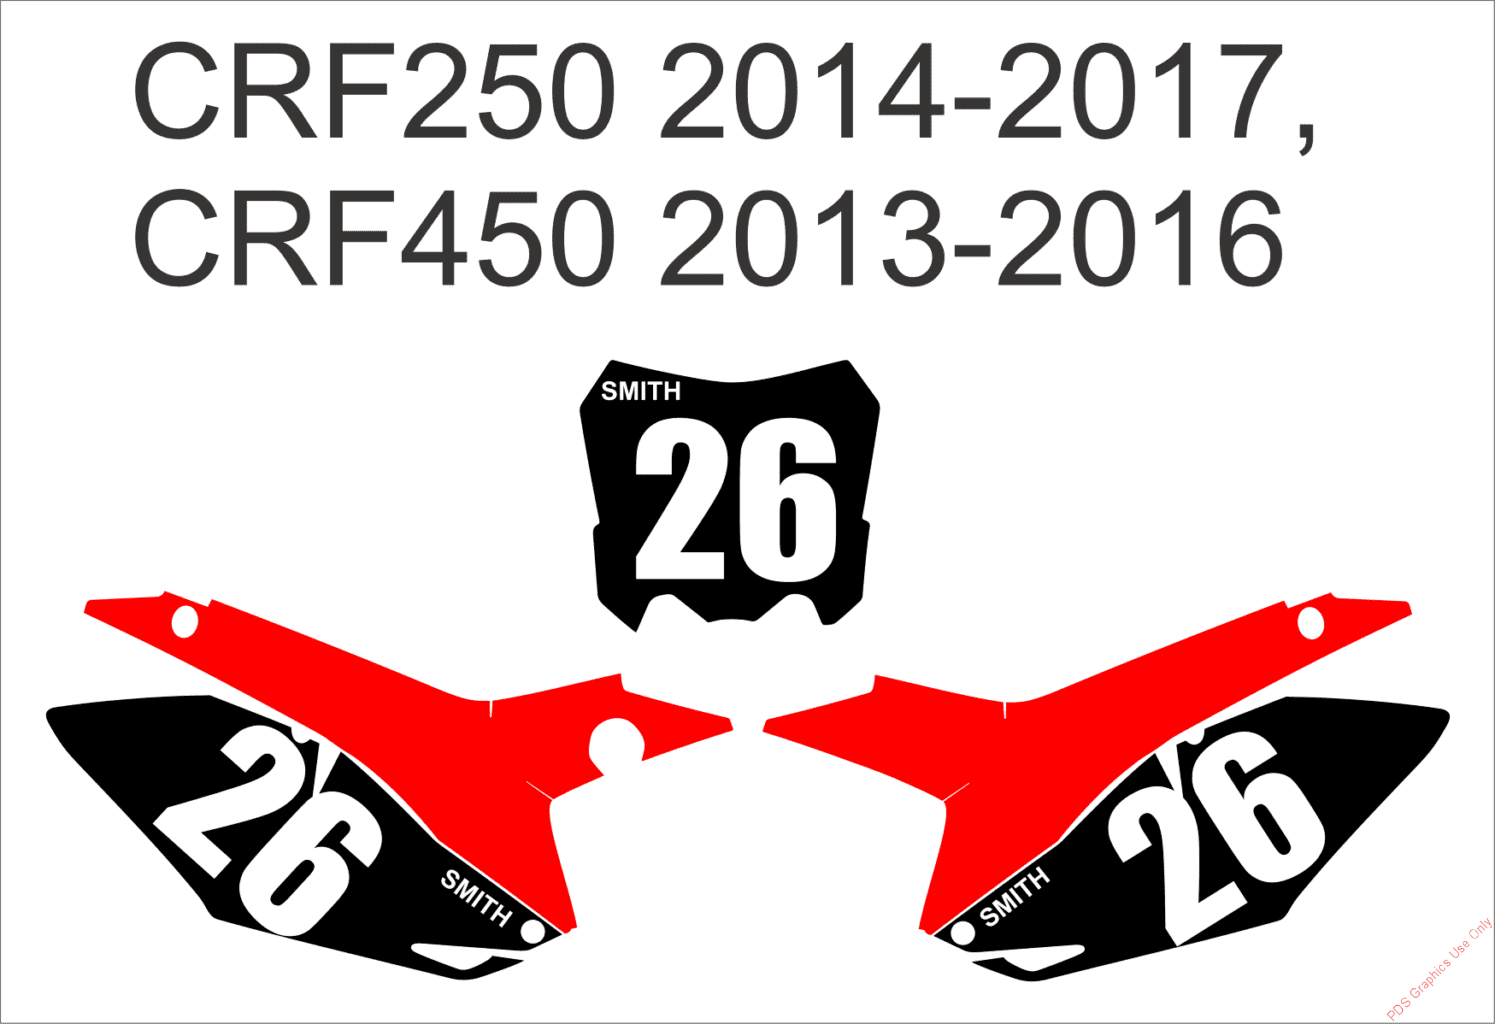 CRF250 2010-2013 CRF450 2009-2012 - Basic